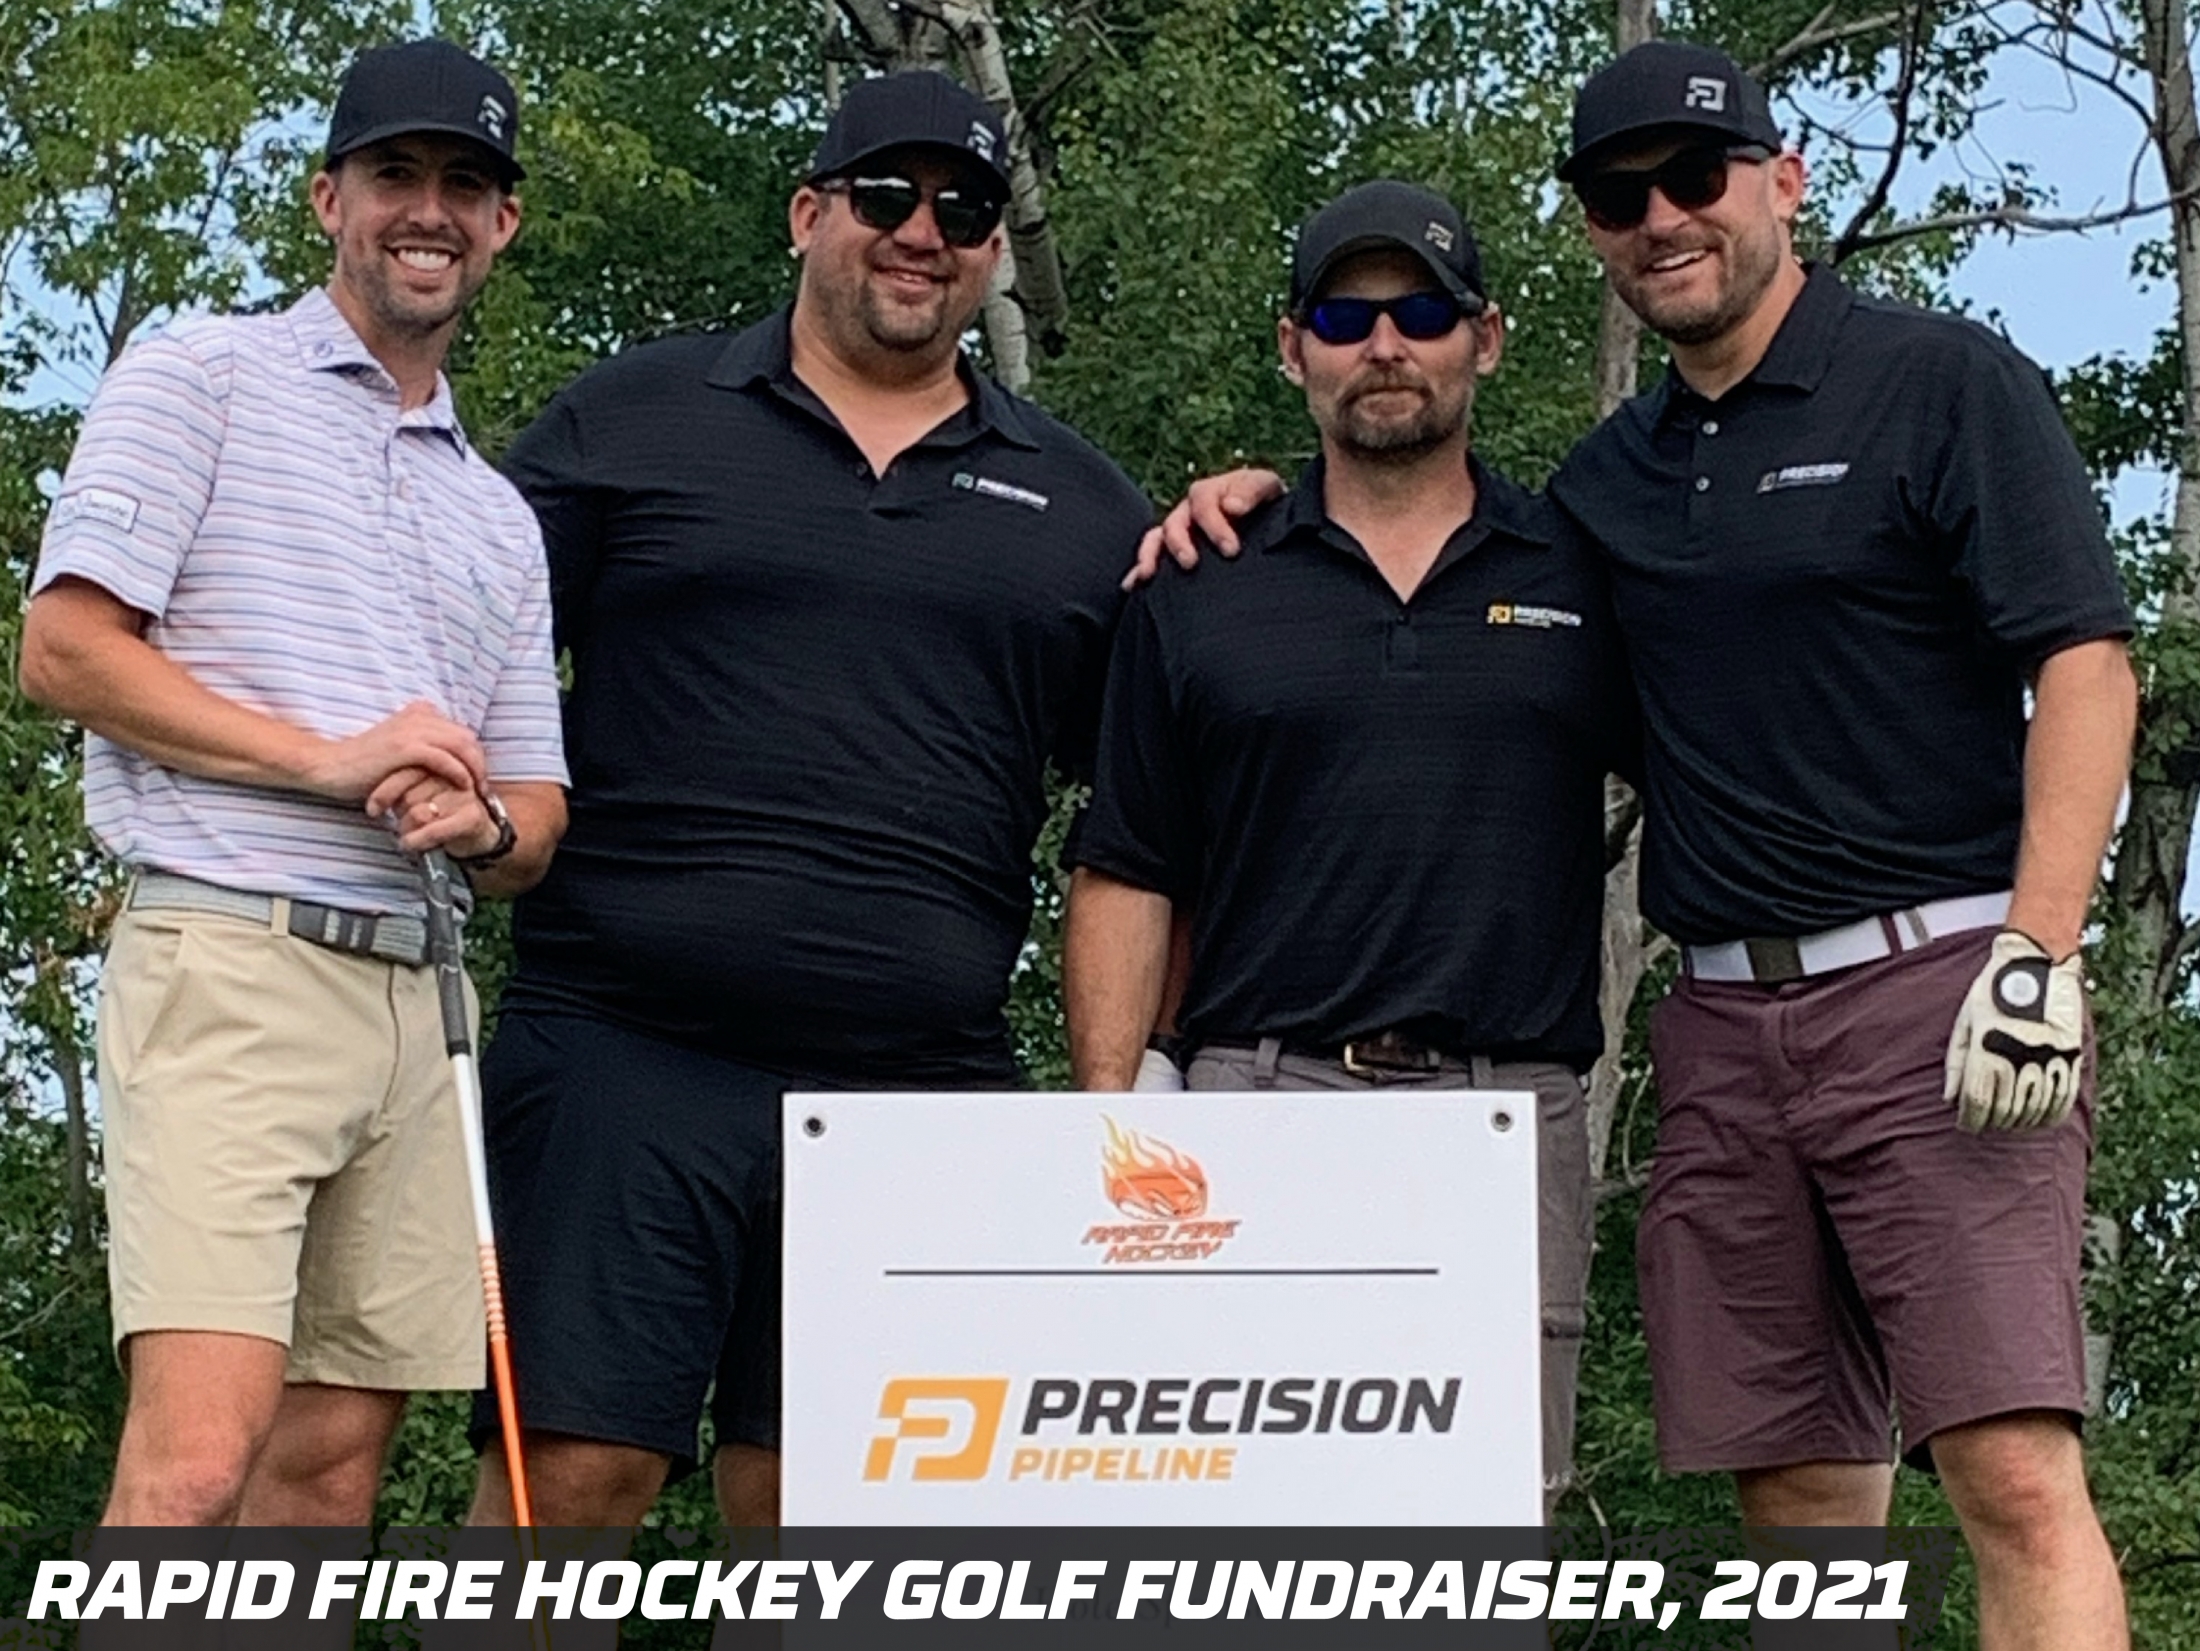 Precision Pipeline Community Involvement: Rapid Fire Hockey Golf Fundraiser, 2021